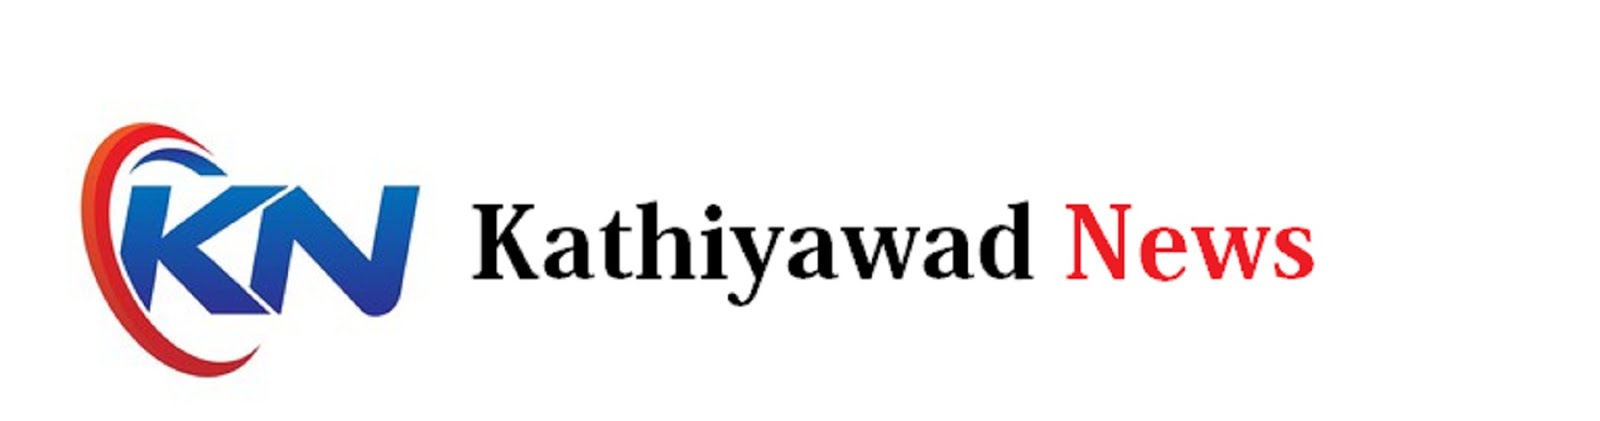 Kathiyawad News - Read Kathiyawadi, Technical News In Your Language 